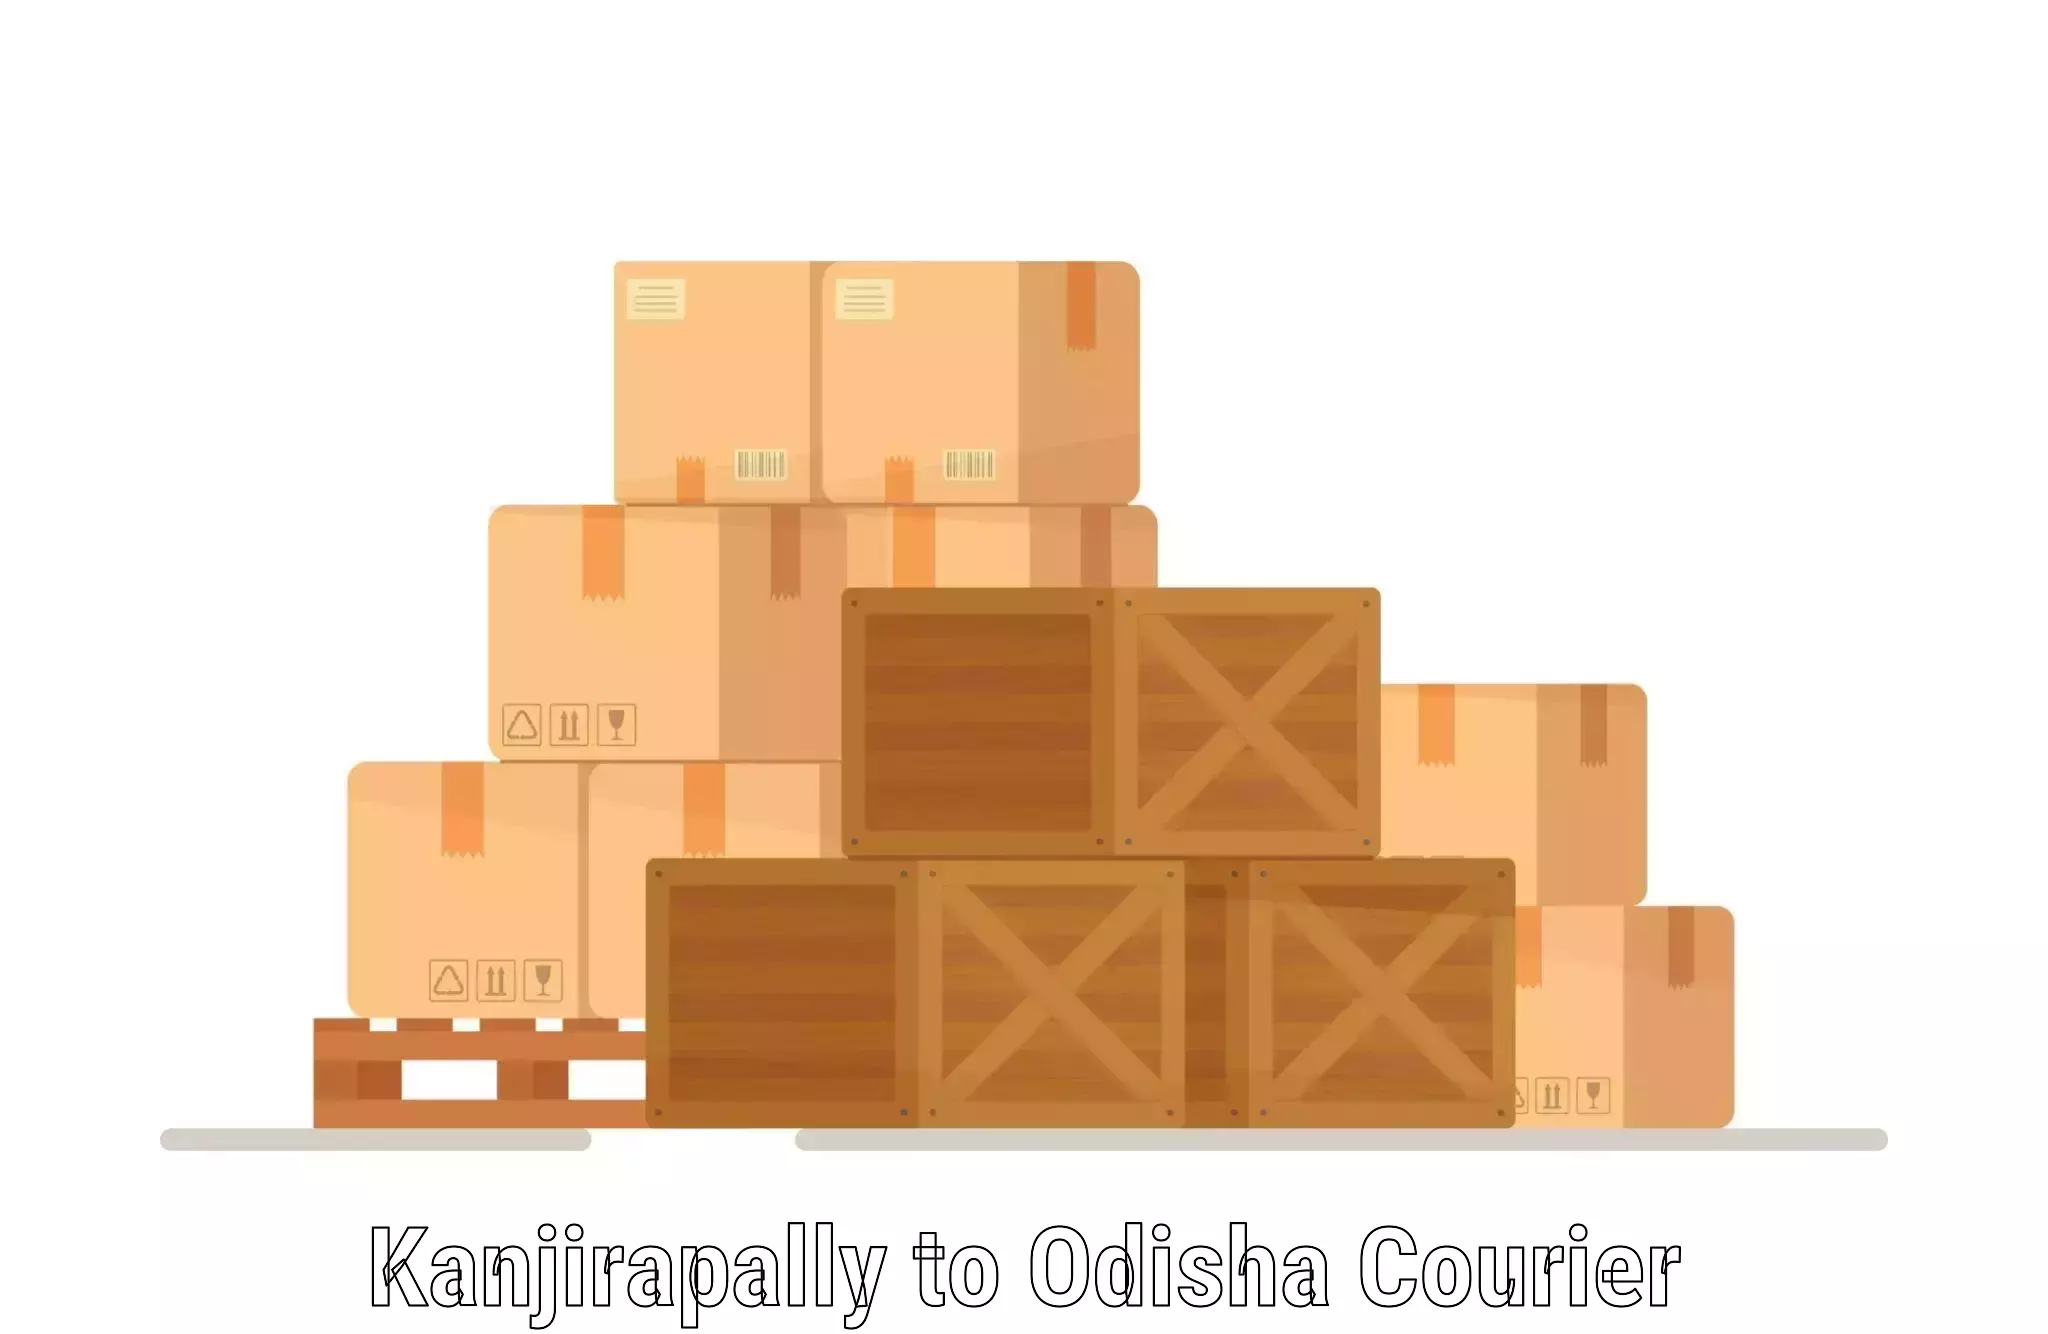 Fast delivery service Kanjirapally to Odisha